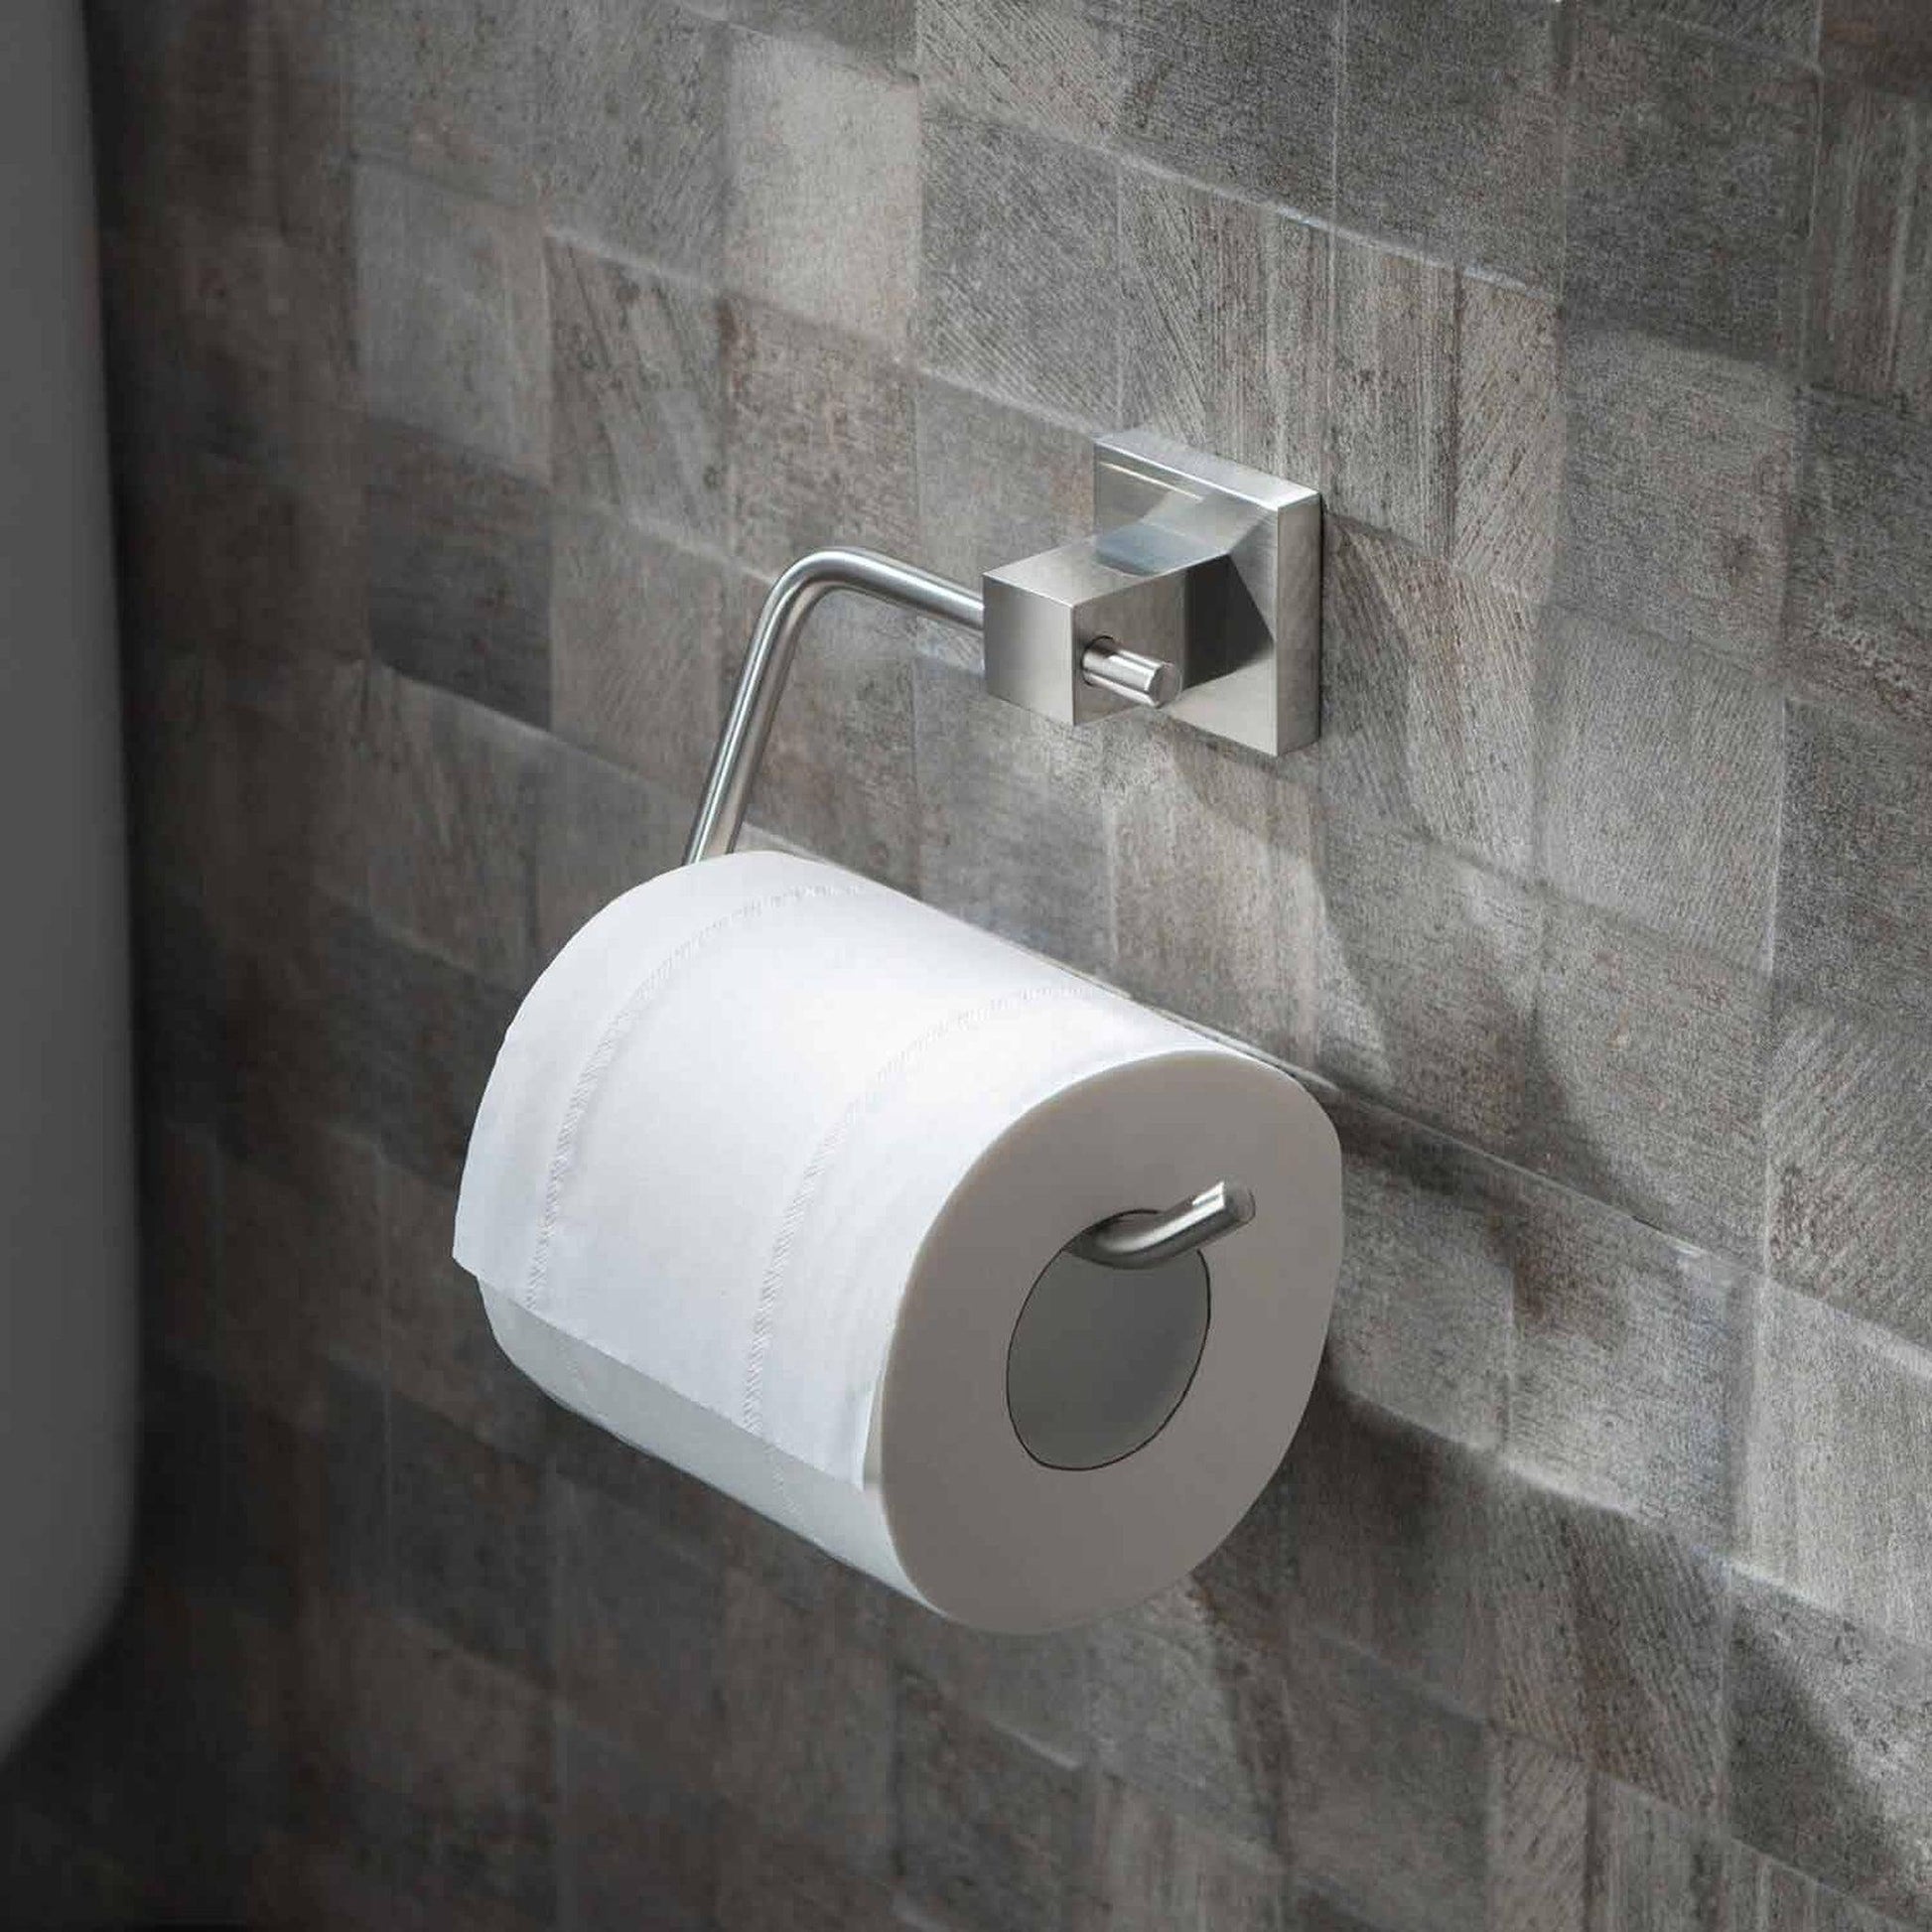 KIBI Cube Brass Bathroom Toilet Paper Holder in Brushed Nickel Finish